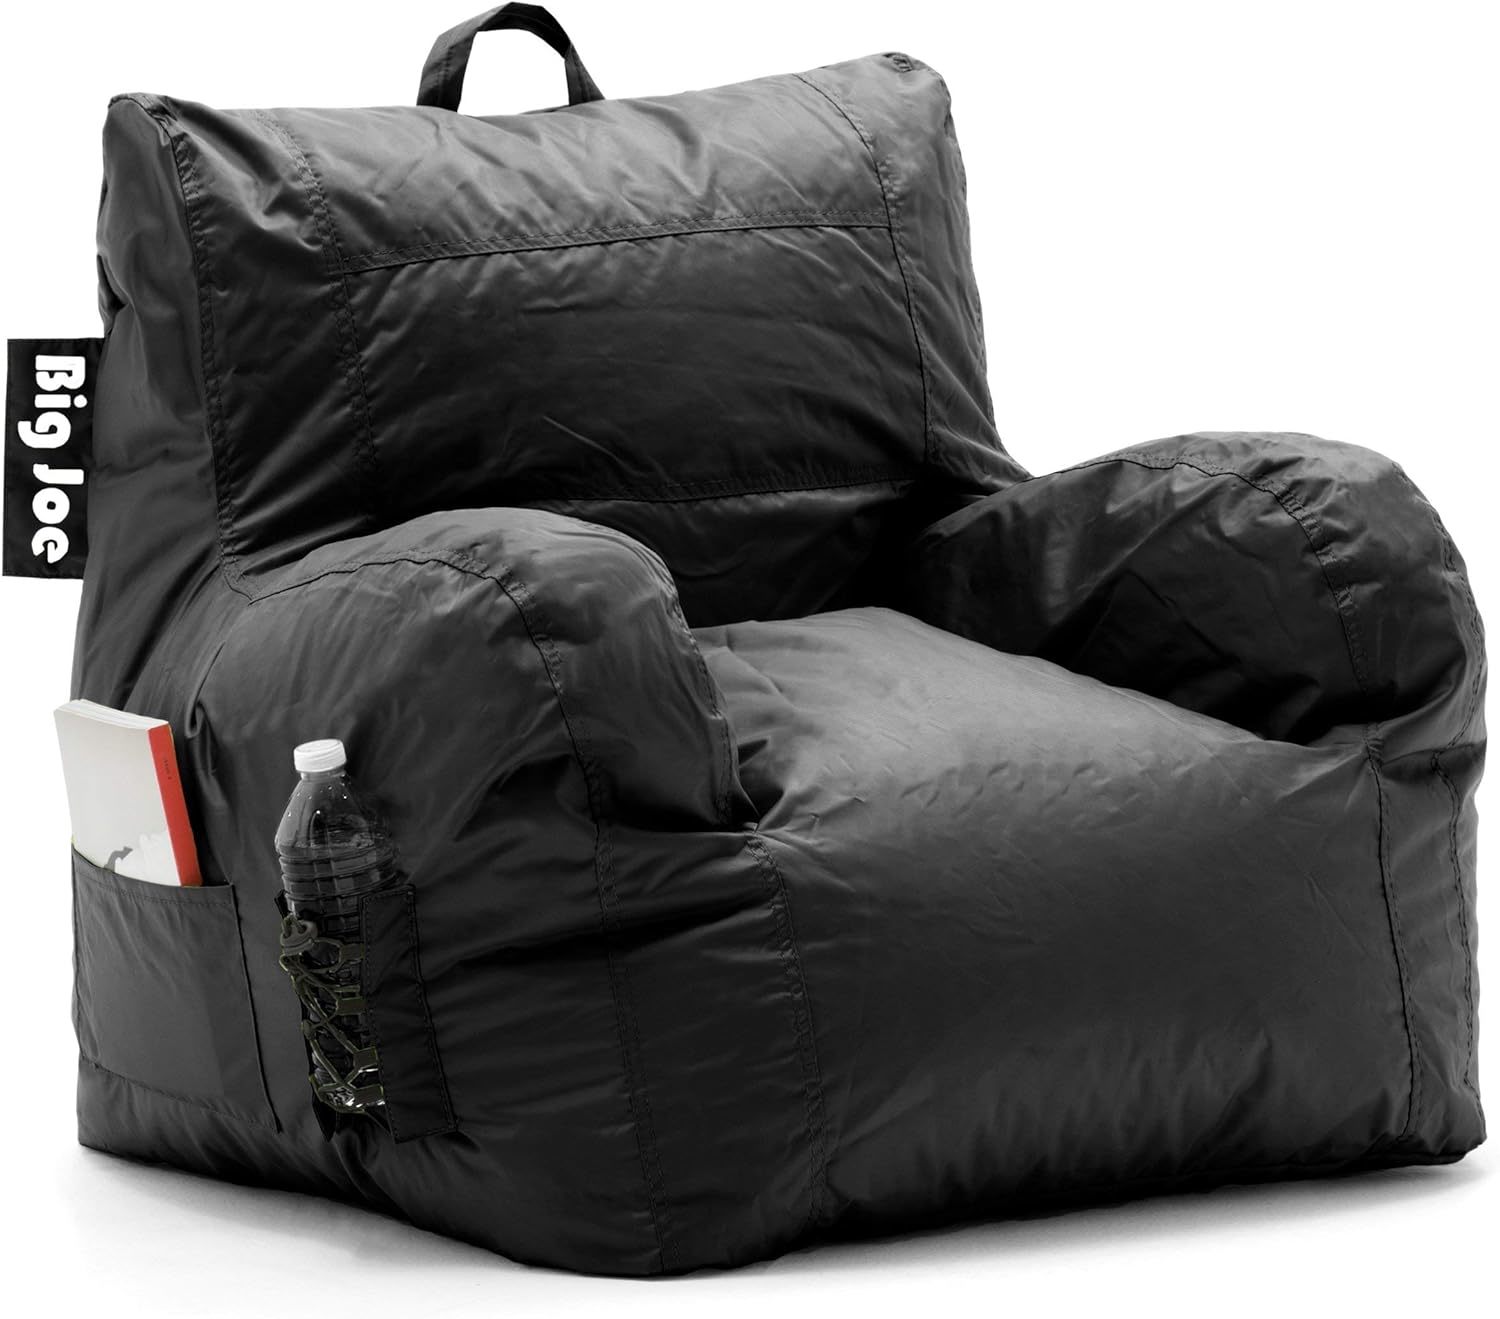 Black Smartmax, 3 Foot Big Joe Dorm Bean Bag Chair With Drink Holder And Pocket. - $77.95